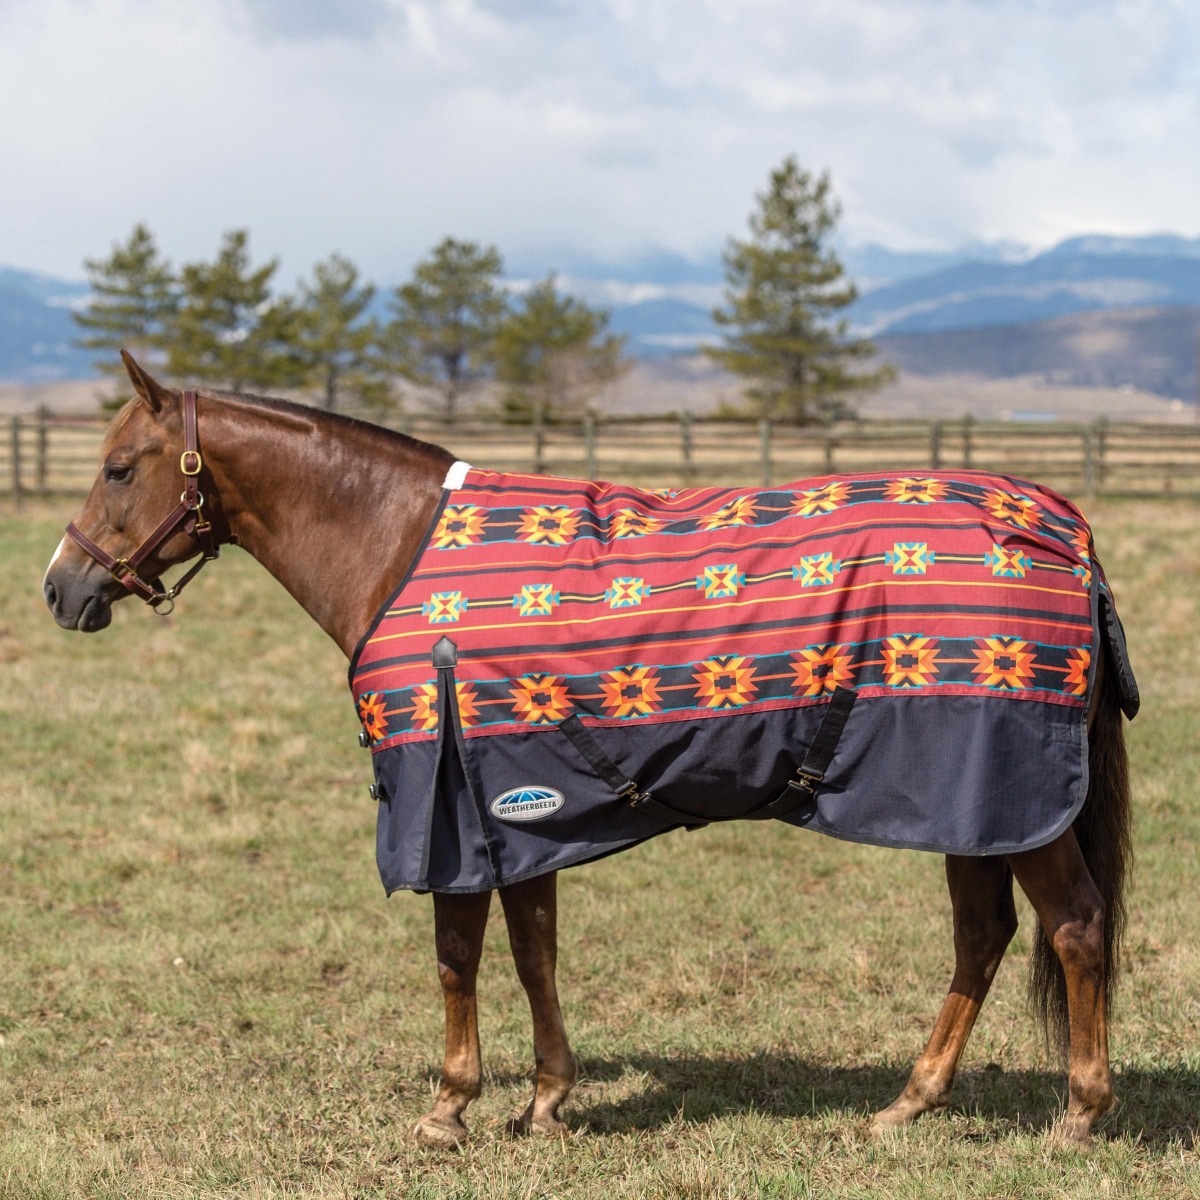 Weatherbeeta Horse Blanket Size Chart